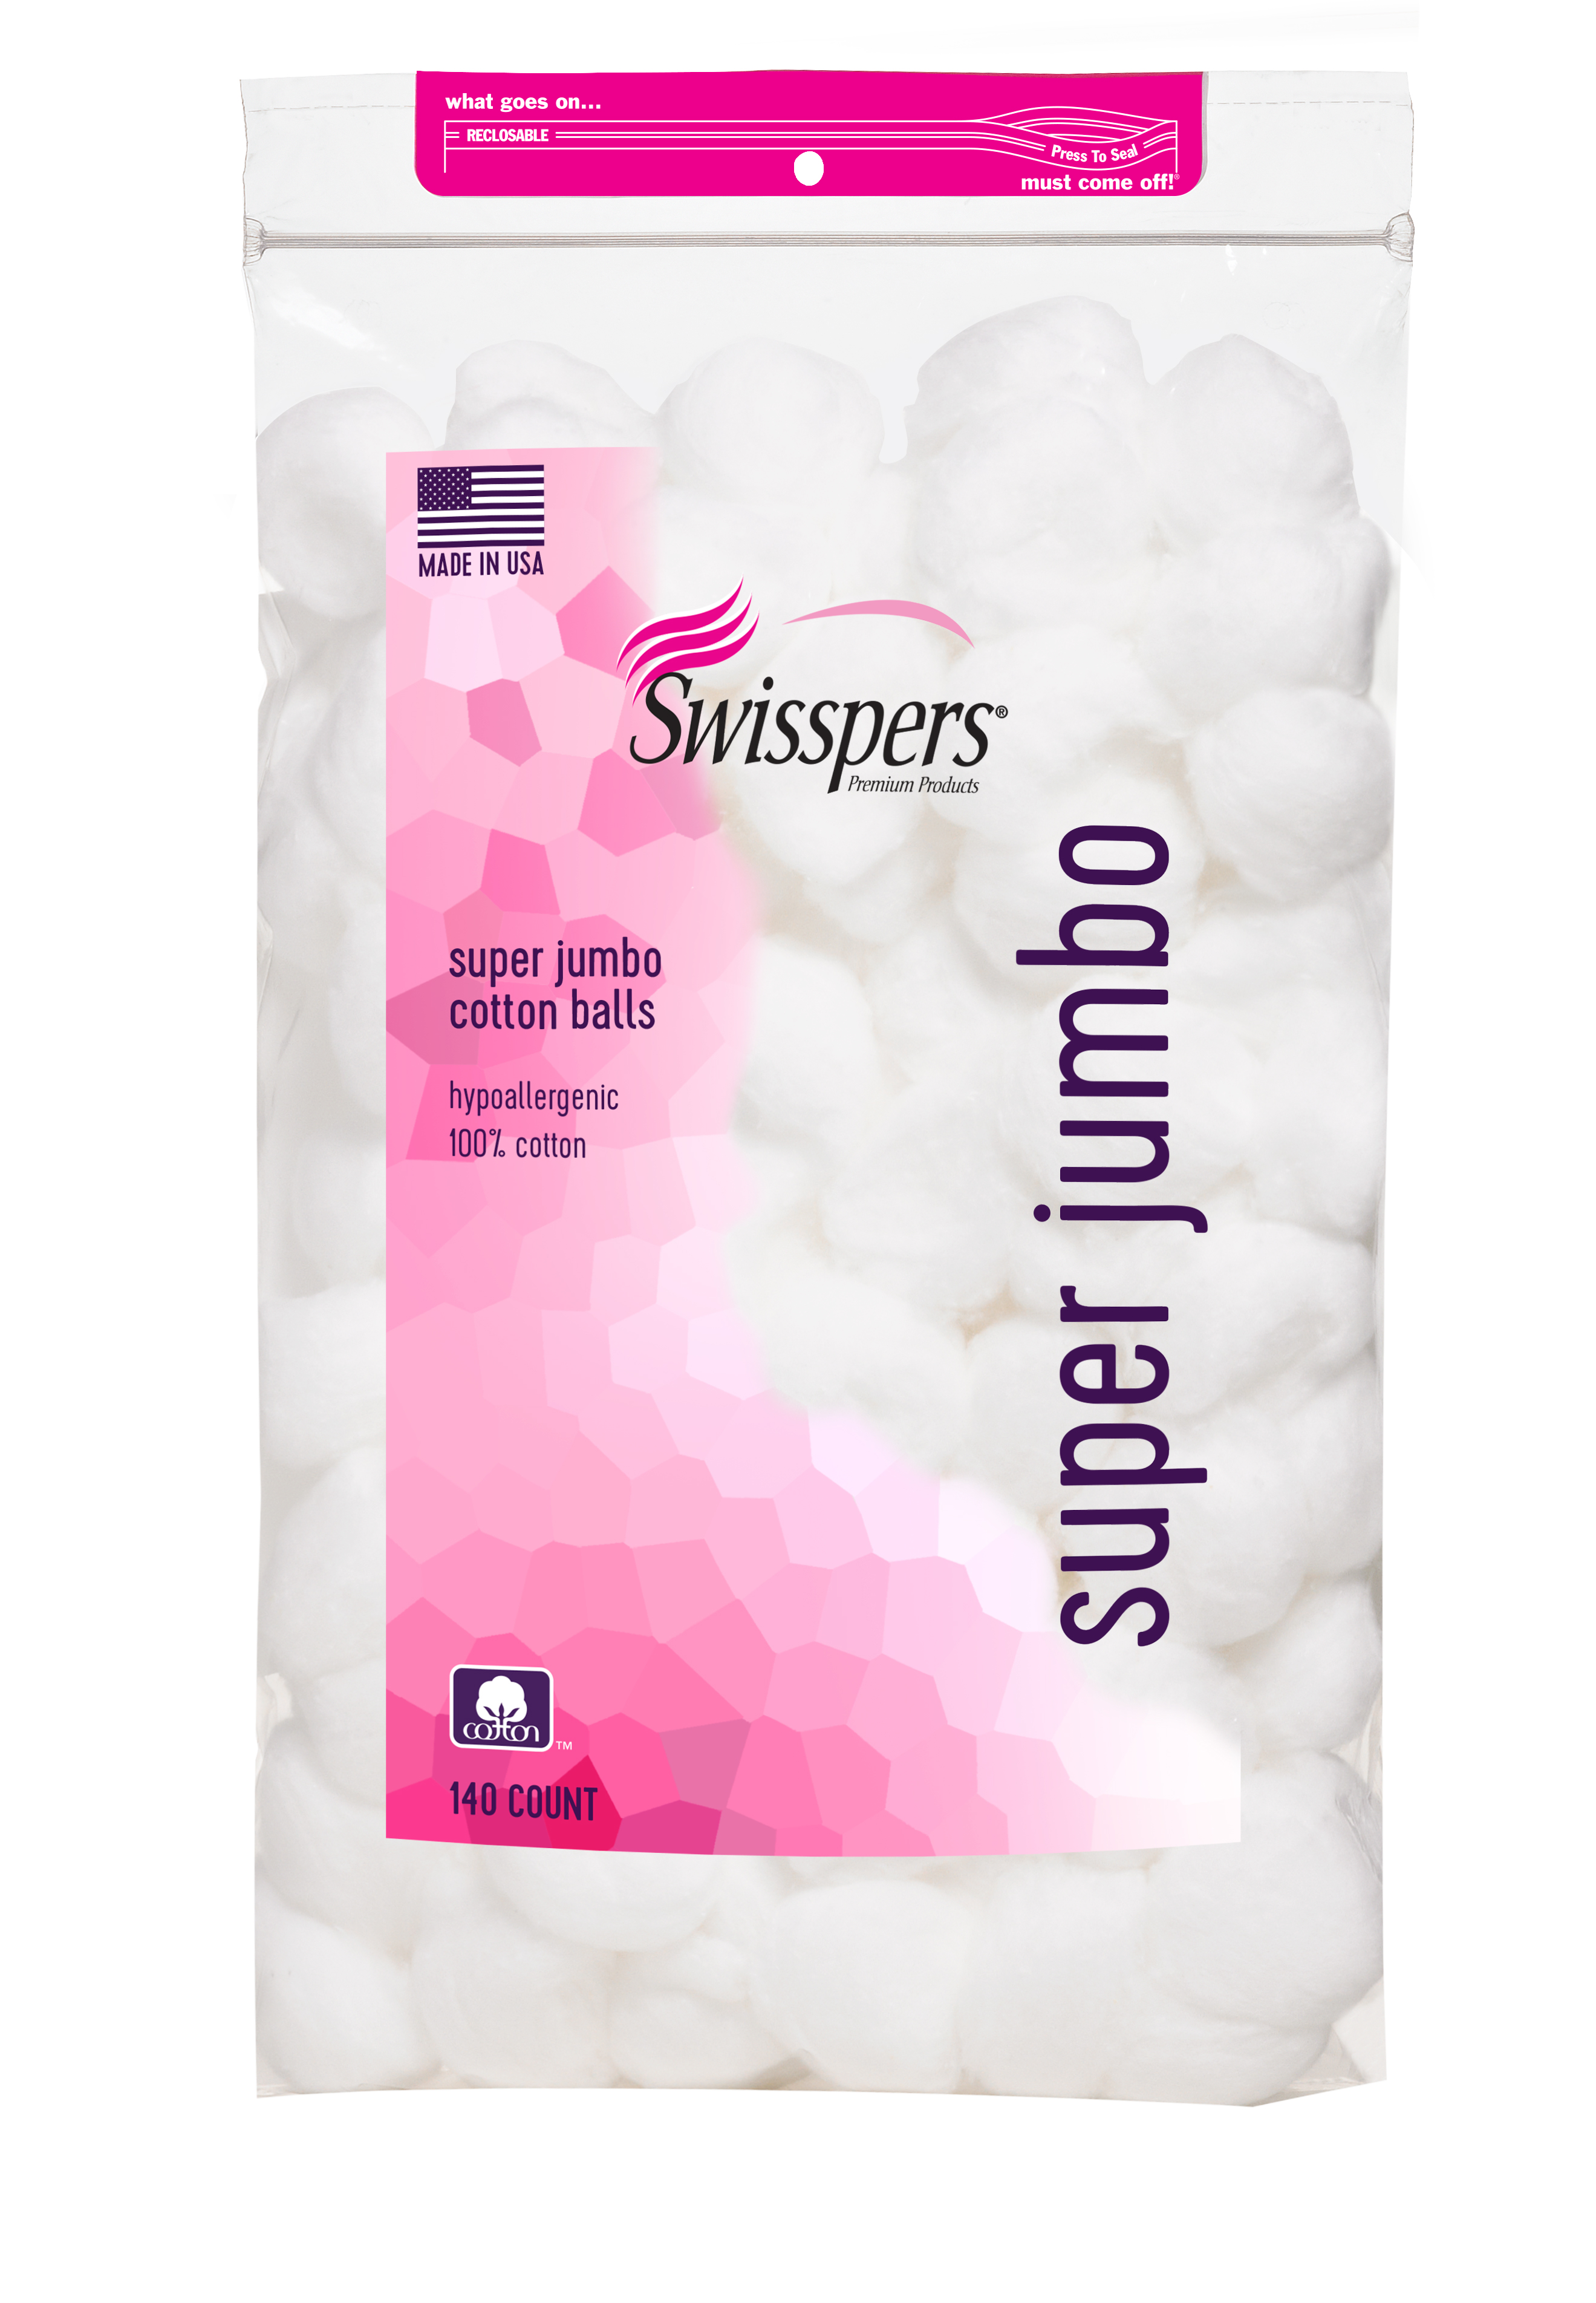 Swisspers 140ct, 100% cotton, white, Premium Hypoallergenic Super Jumbo Cotton Balls - image 1 of 4